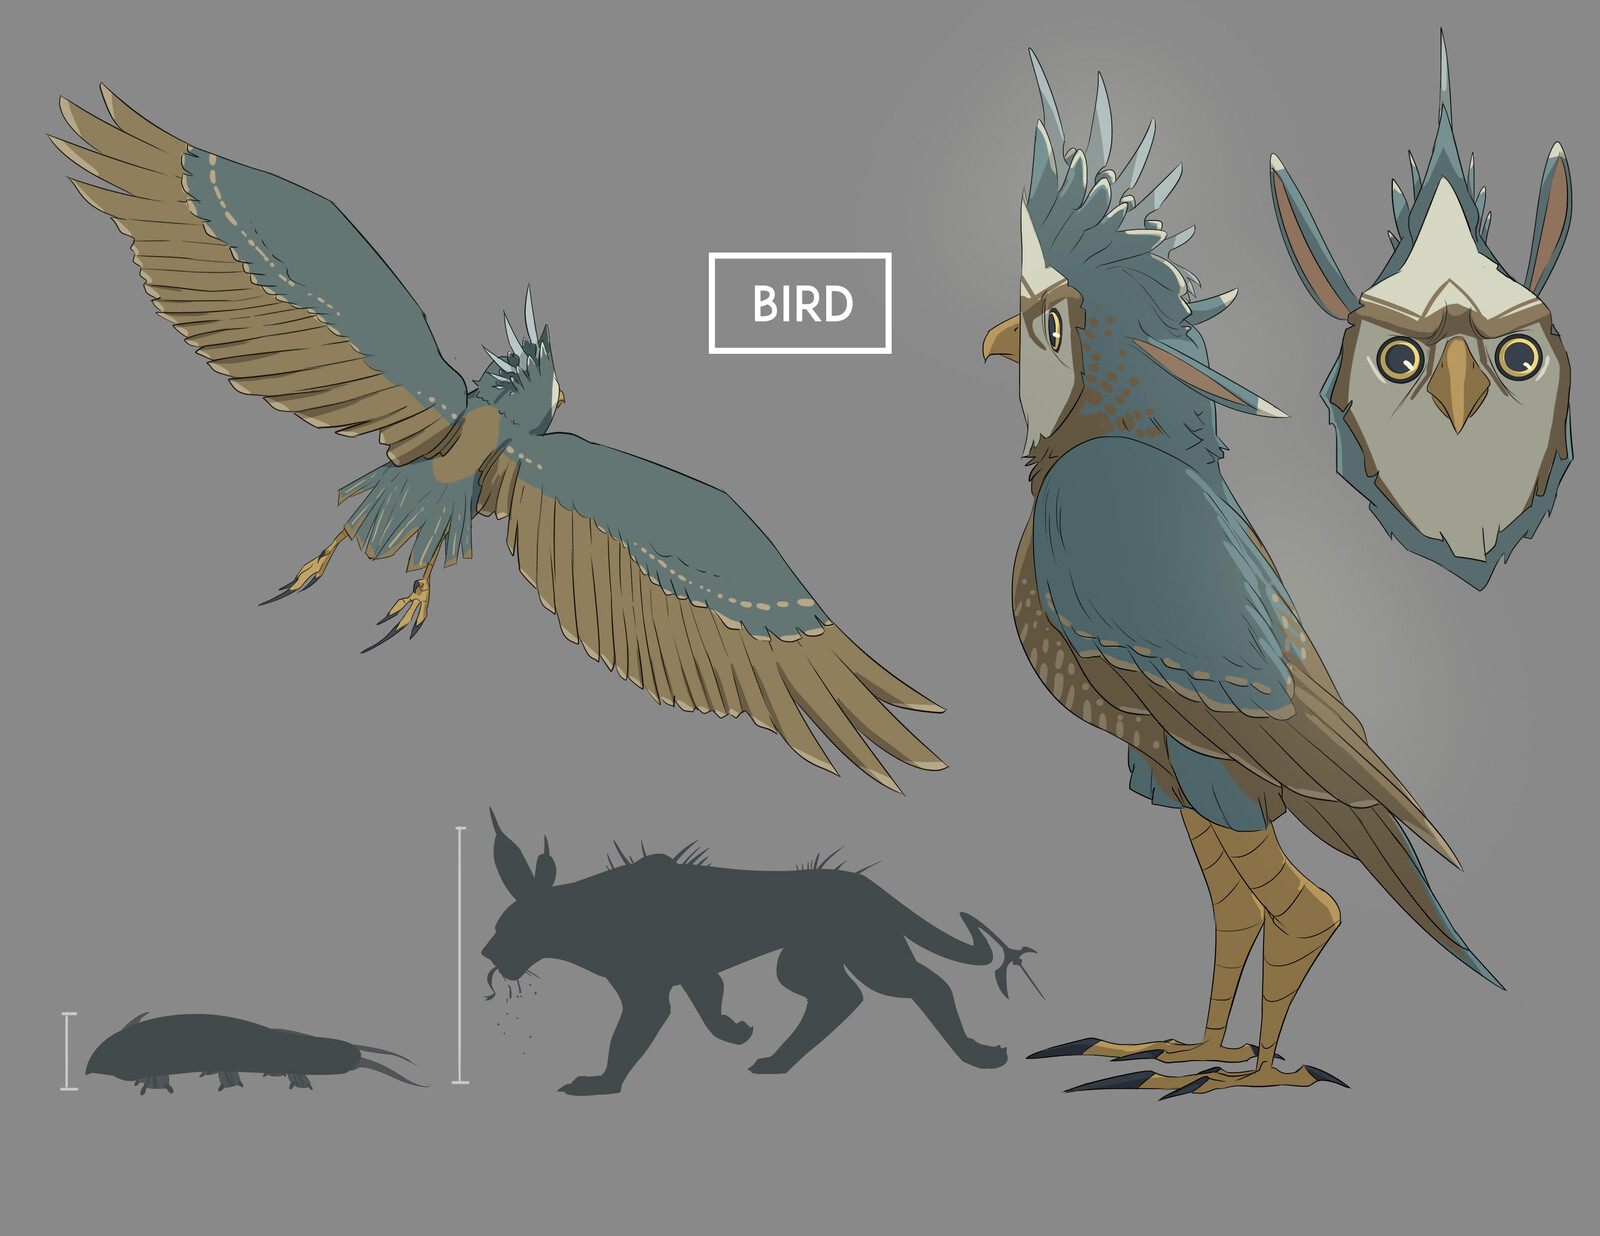 'Life' OGN bird concept (official)